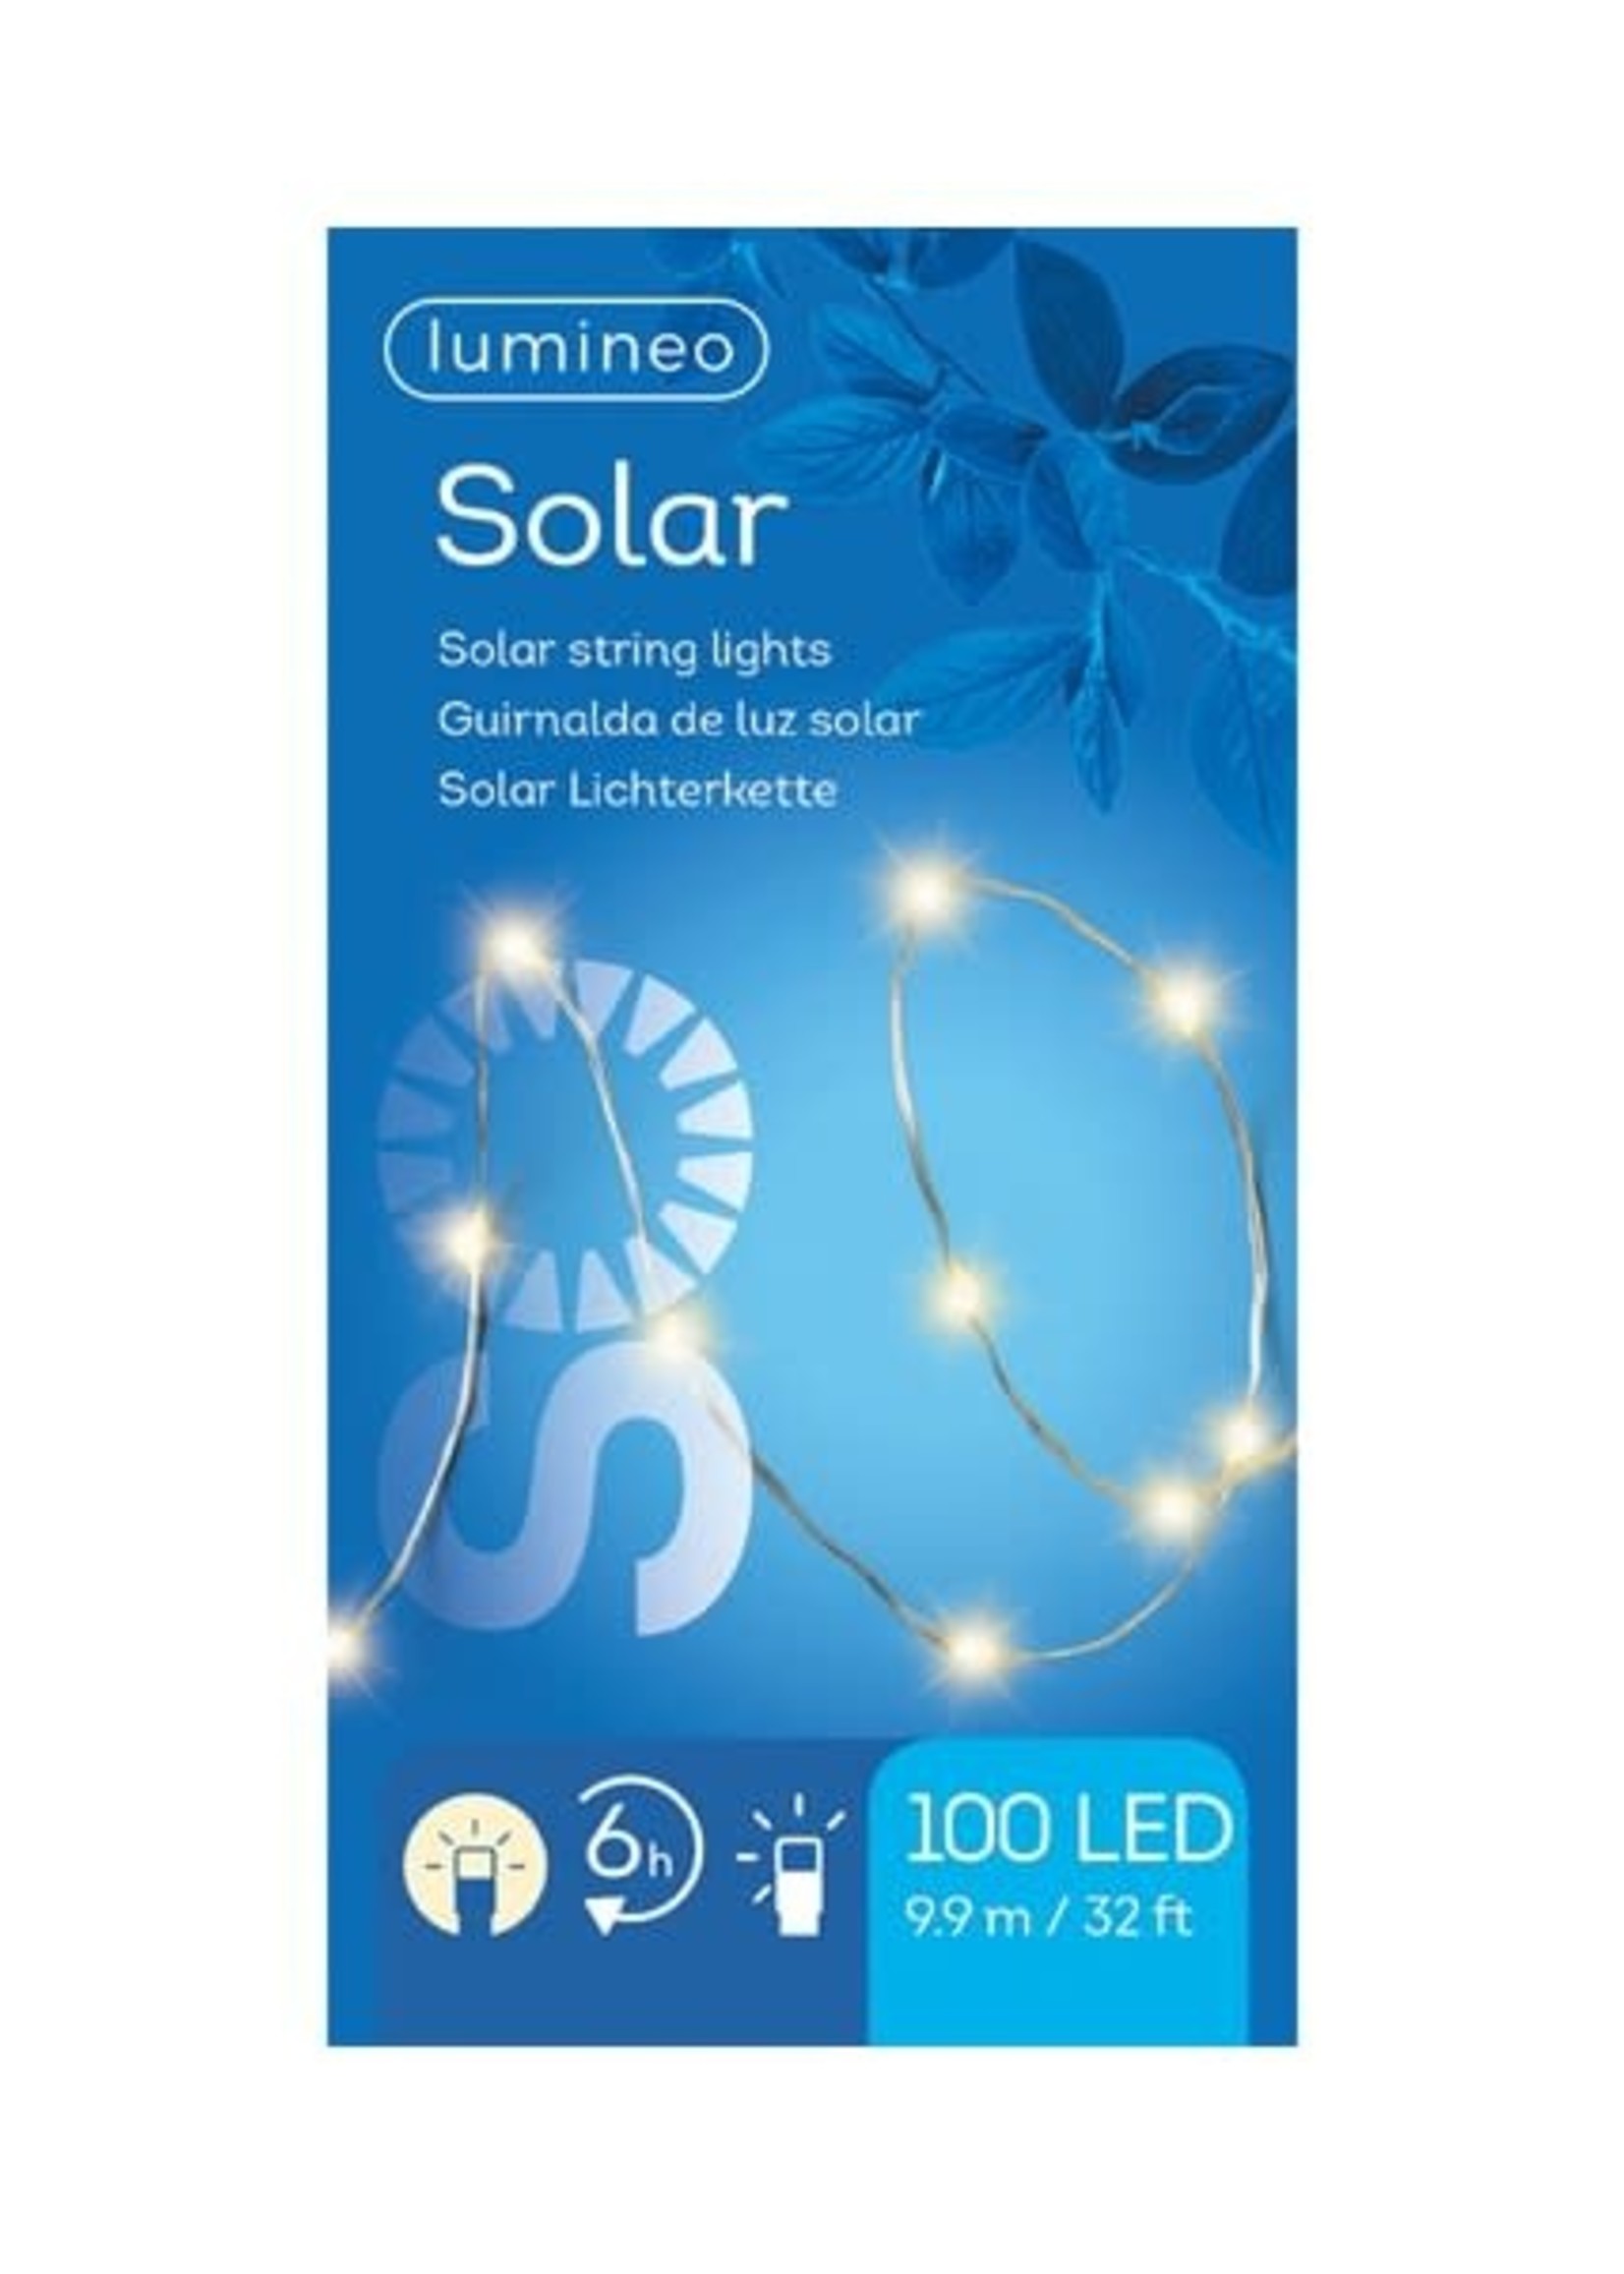 Lumineo Solar Warm White 100 LED Pin Lights